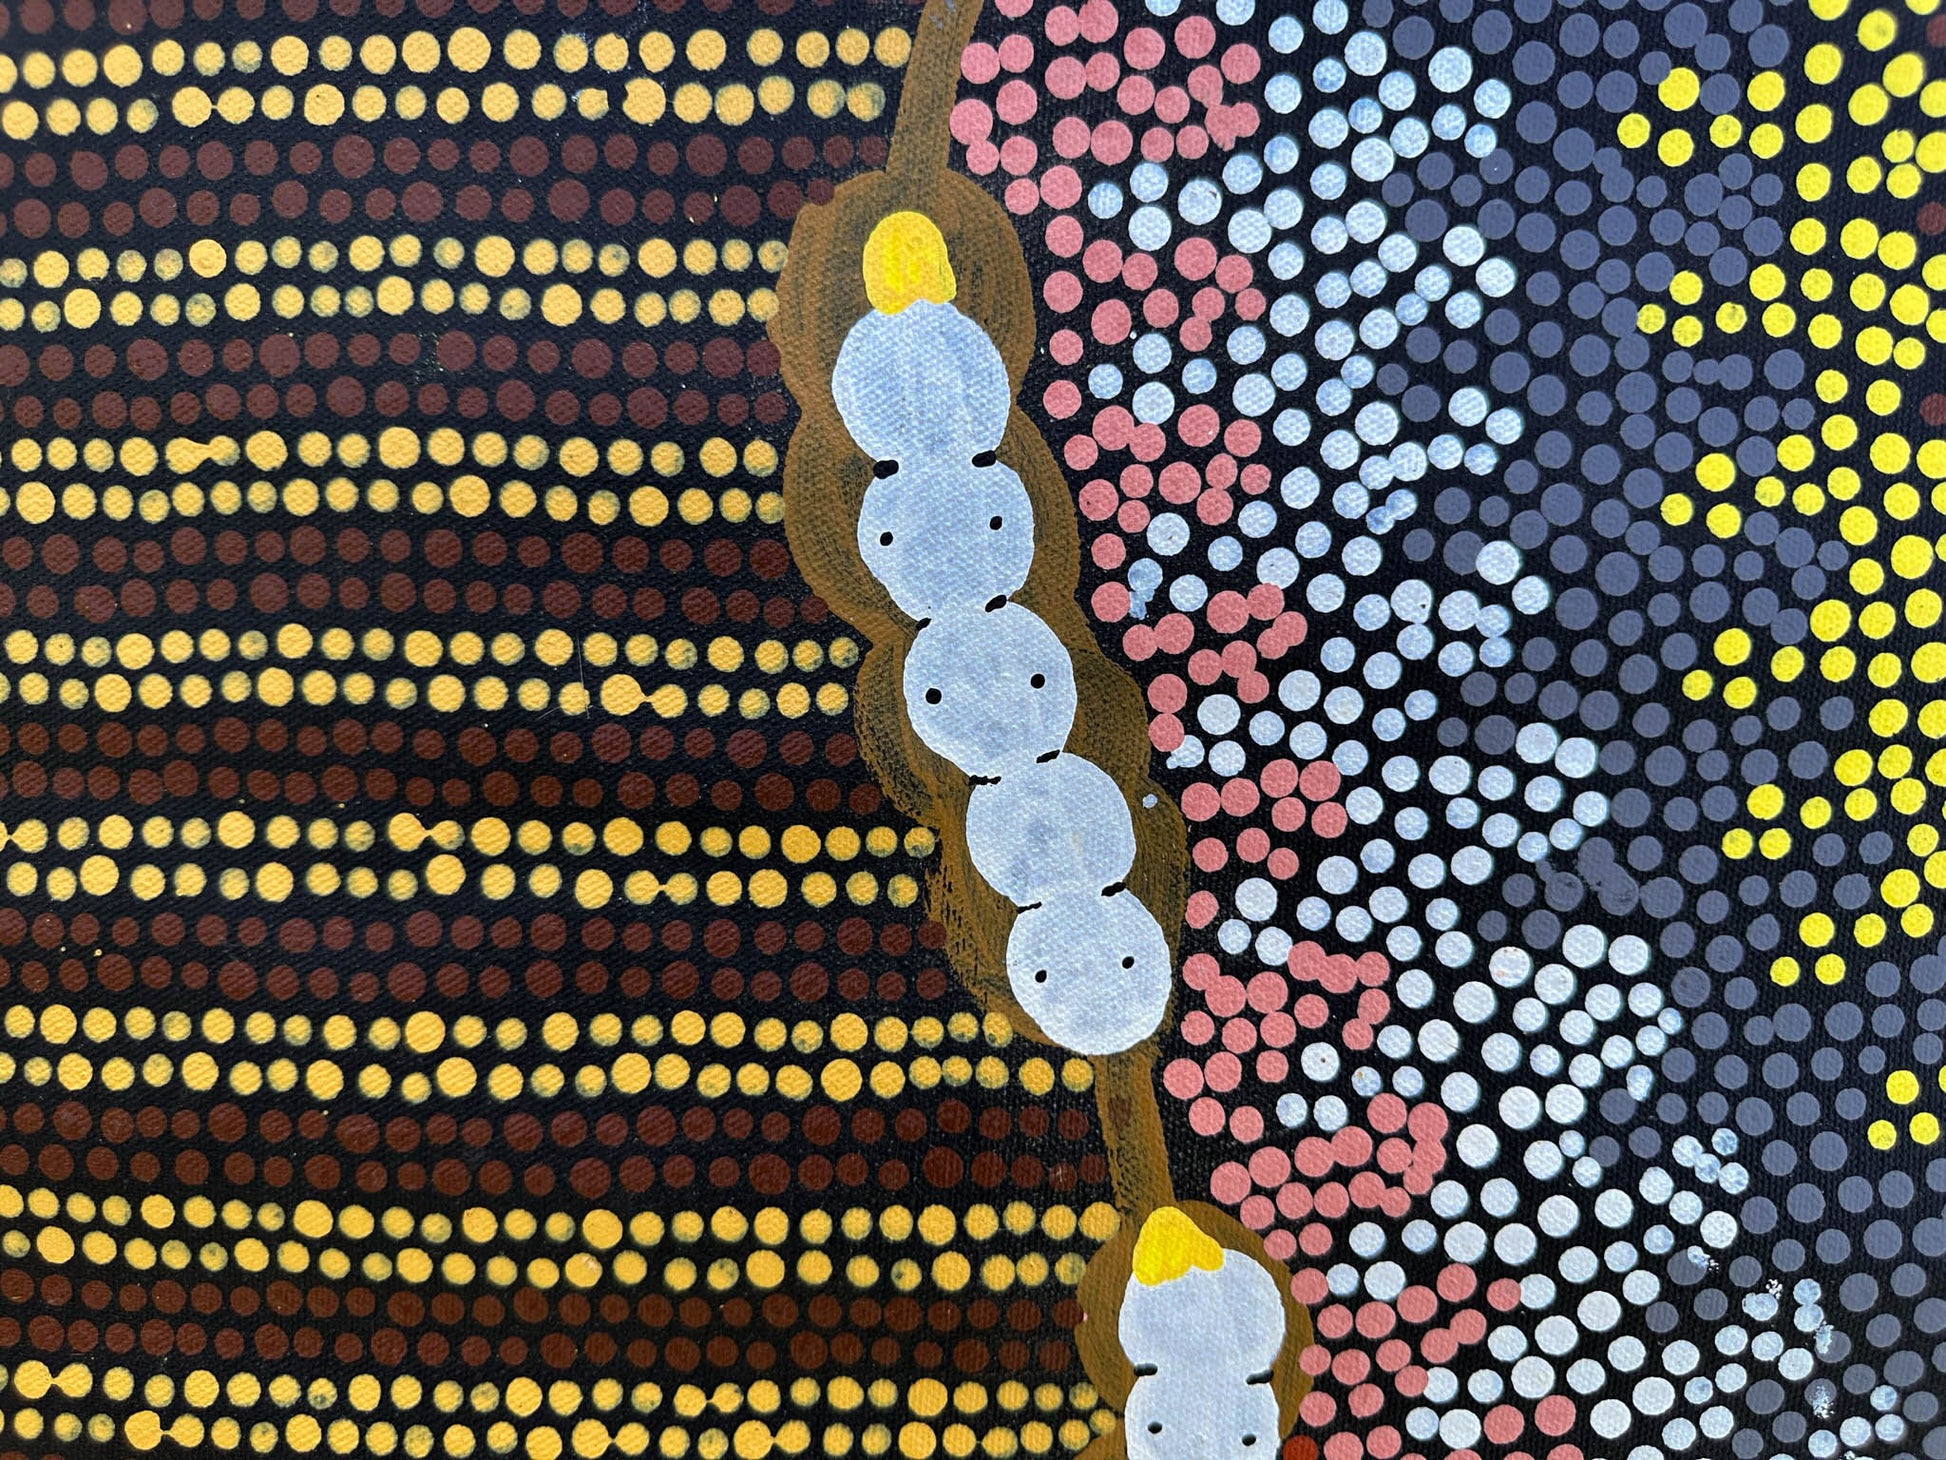 Central Desert Aboriginal Painting - Acrylic on Canvas